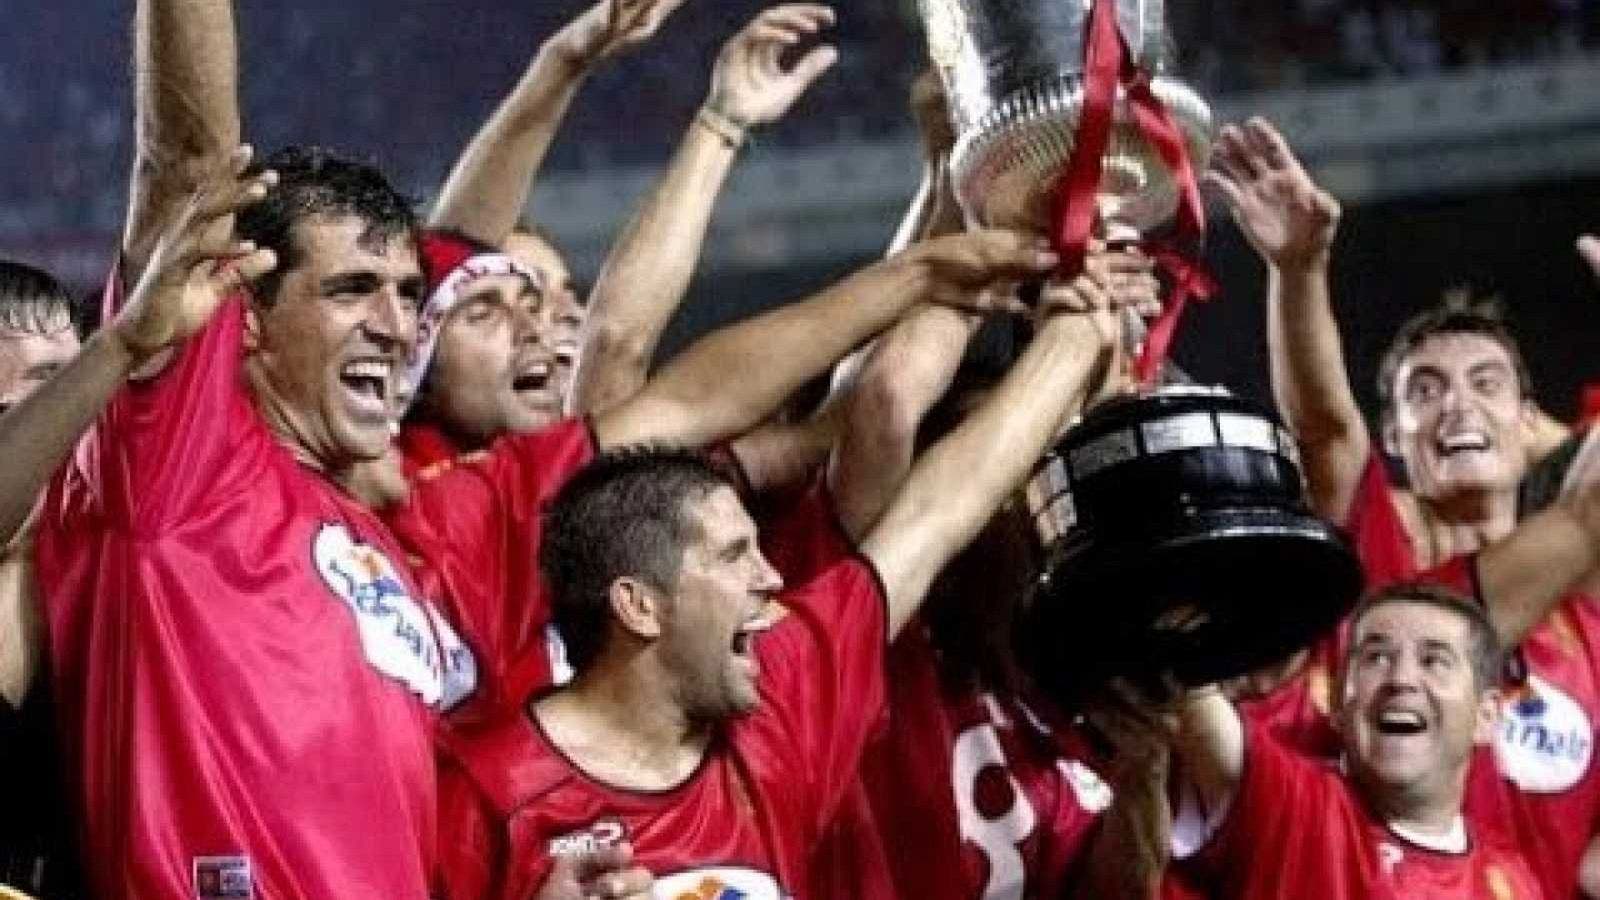 Mallorca's history in the cup predicts a title in La Cartuja
	

